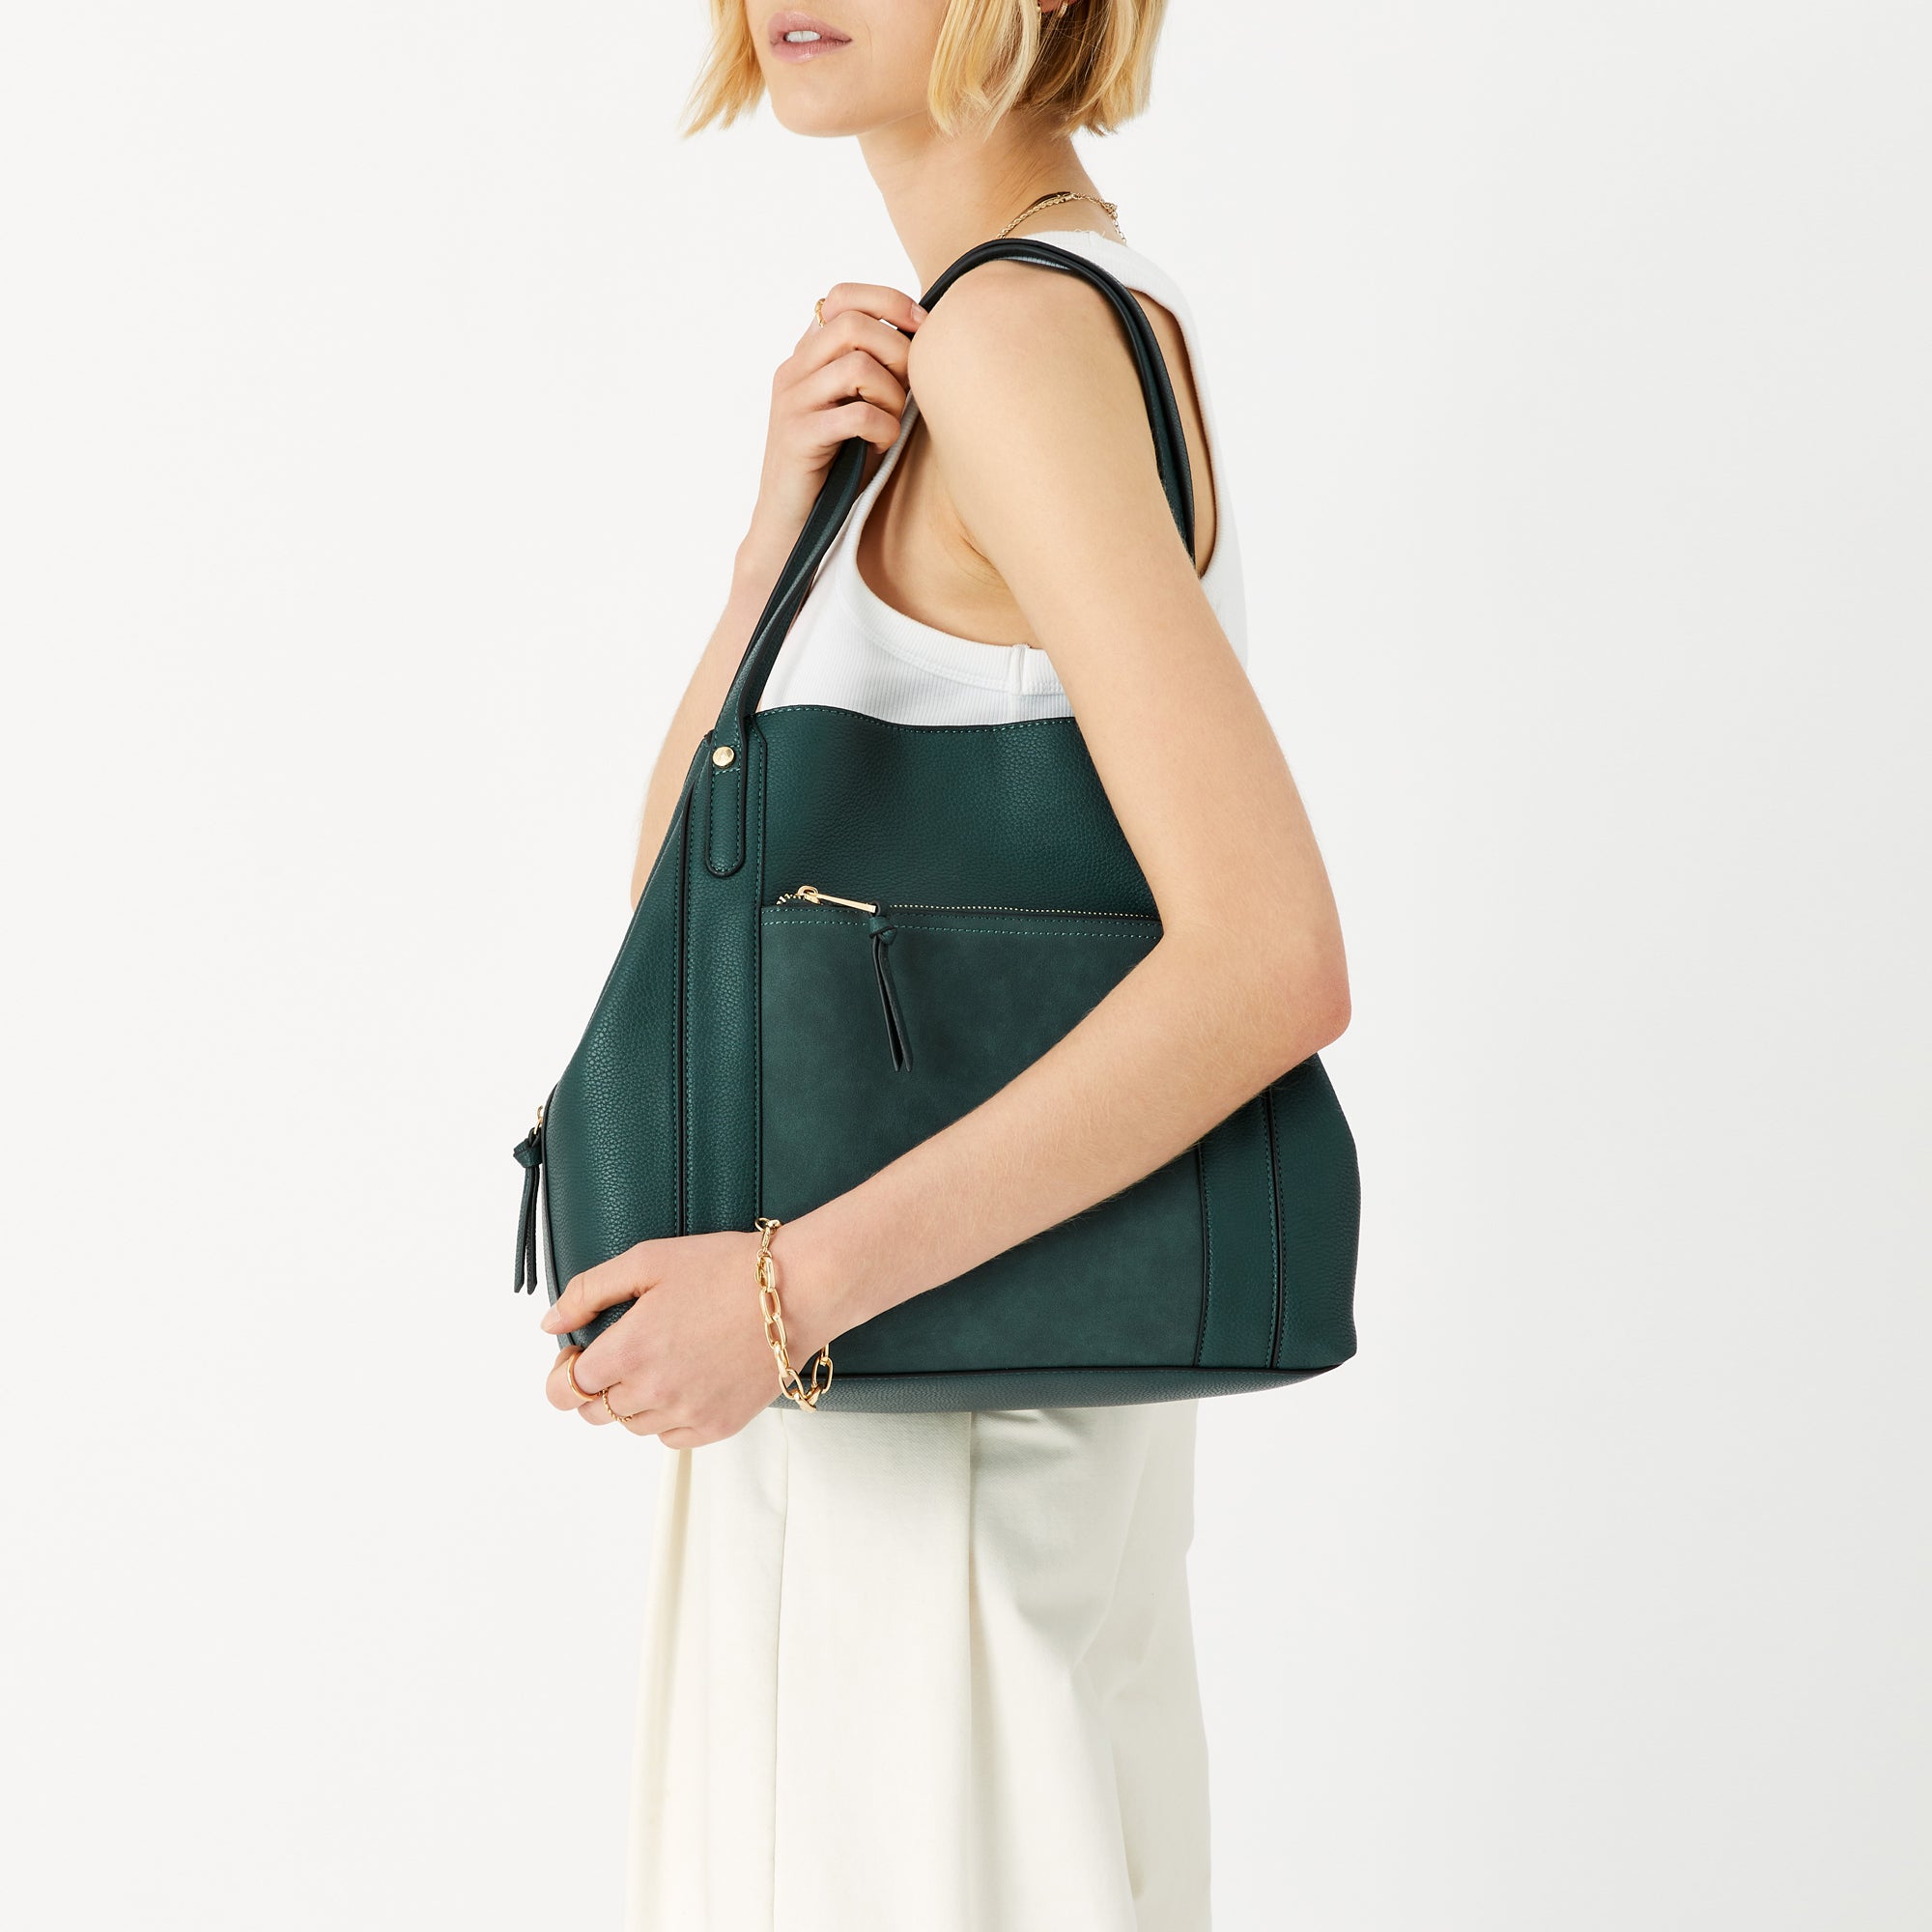 Accessorize London Women's Faux Leather Green Romeo Shoulder Bag